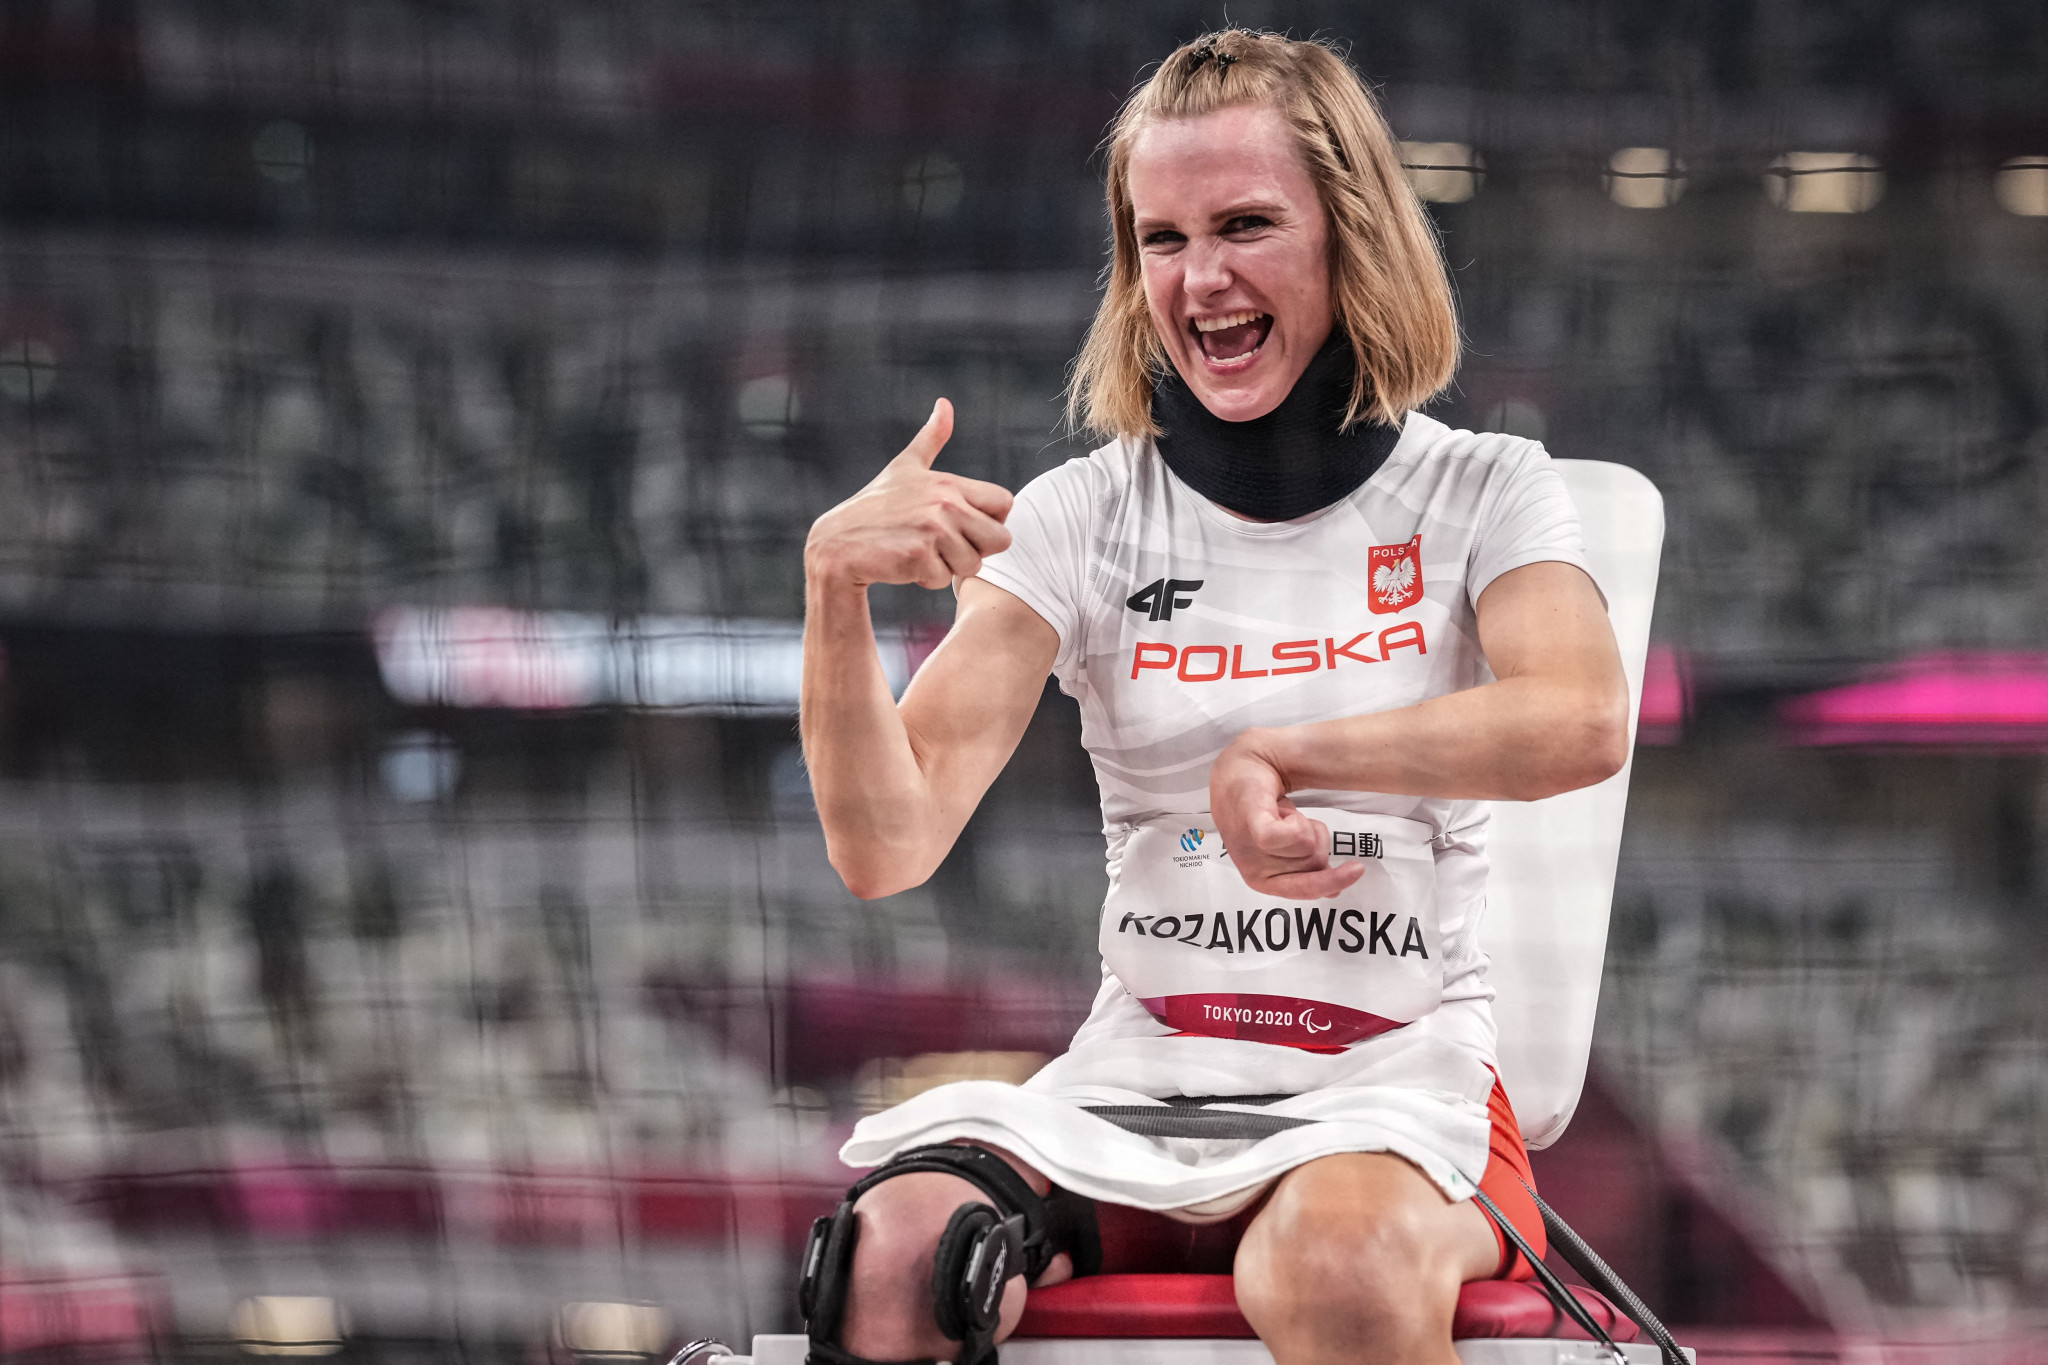 Tokyo 2020 gold medallist Kozakowska awarded Polish Disabled Athlete of the Year